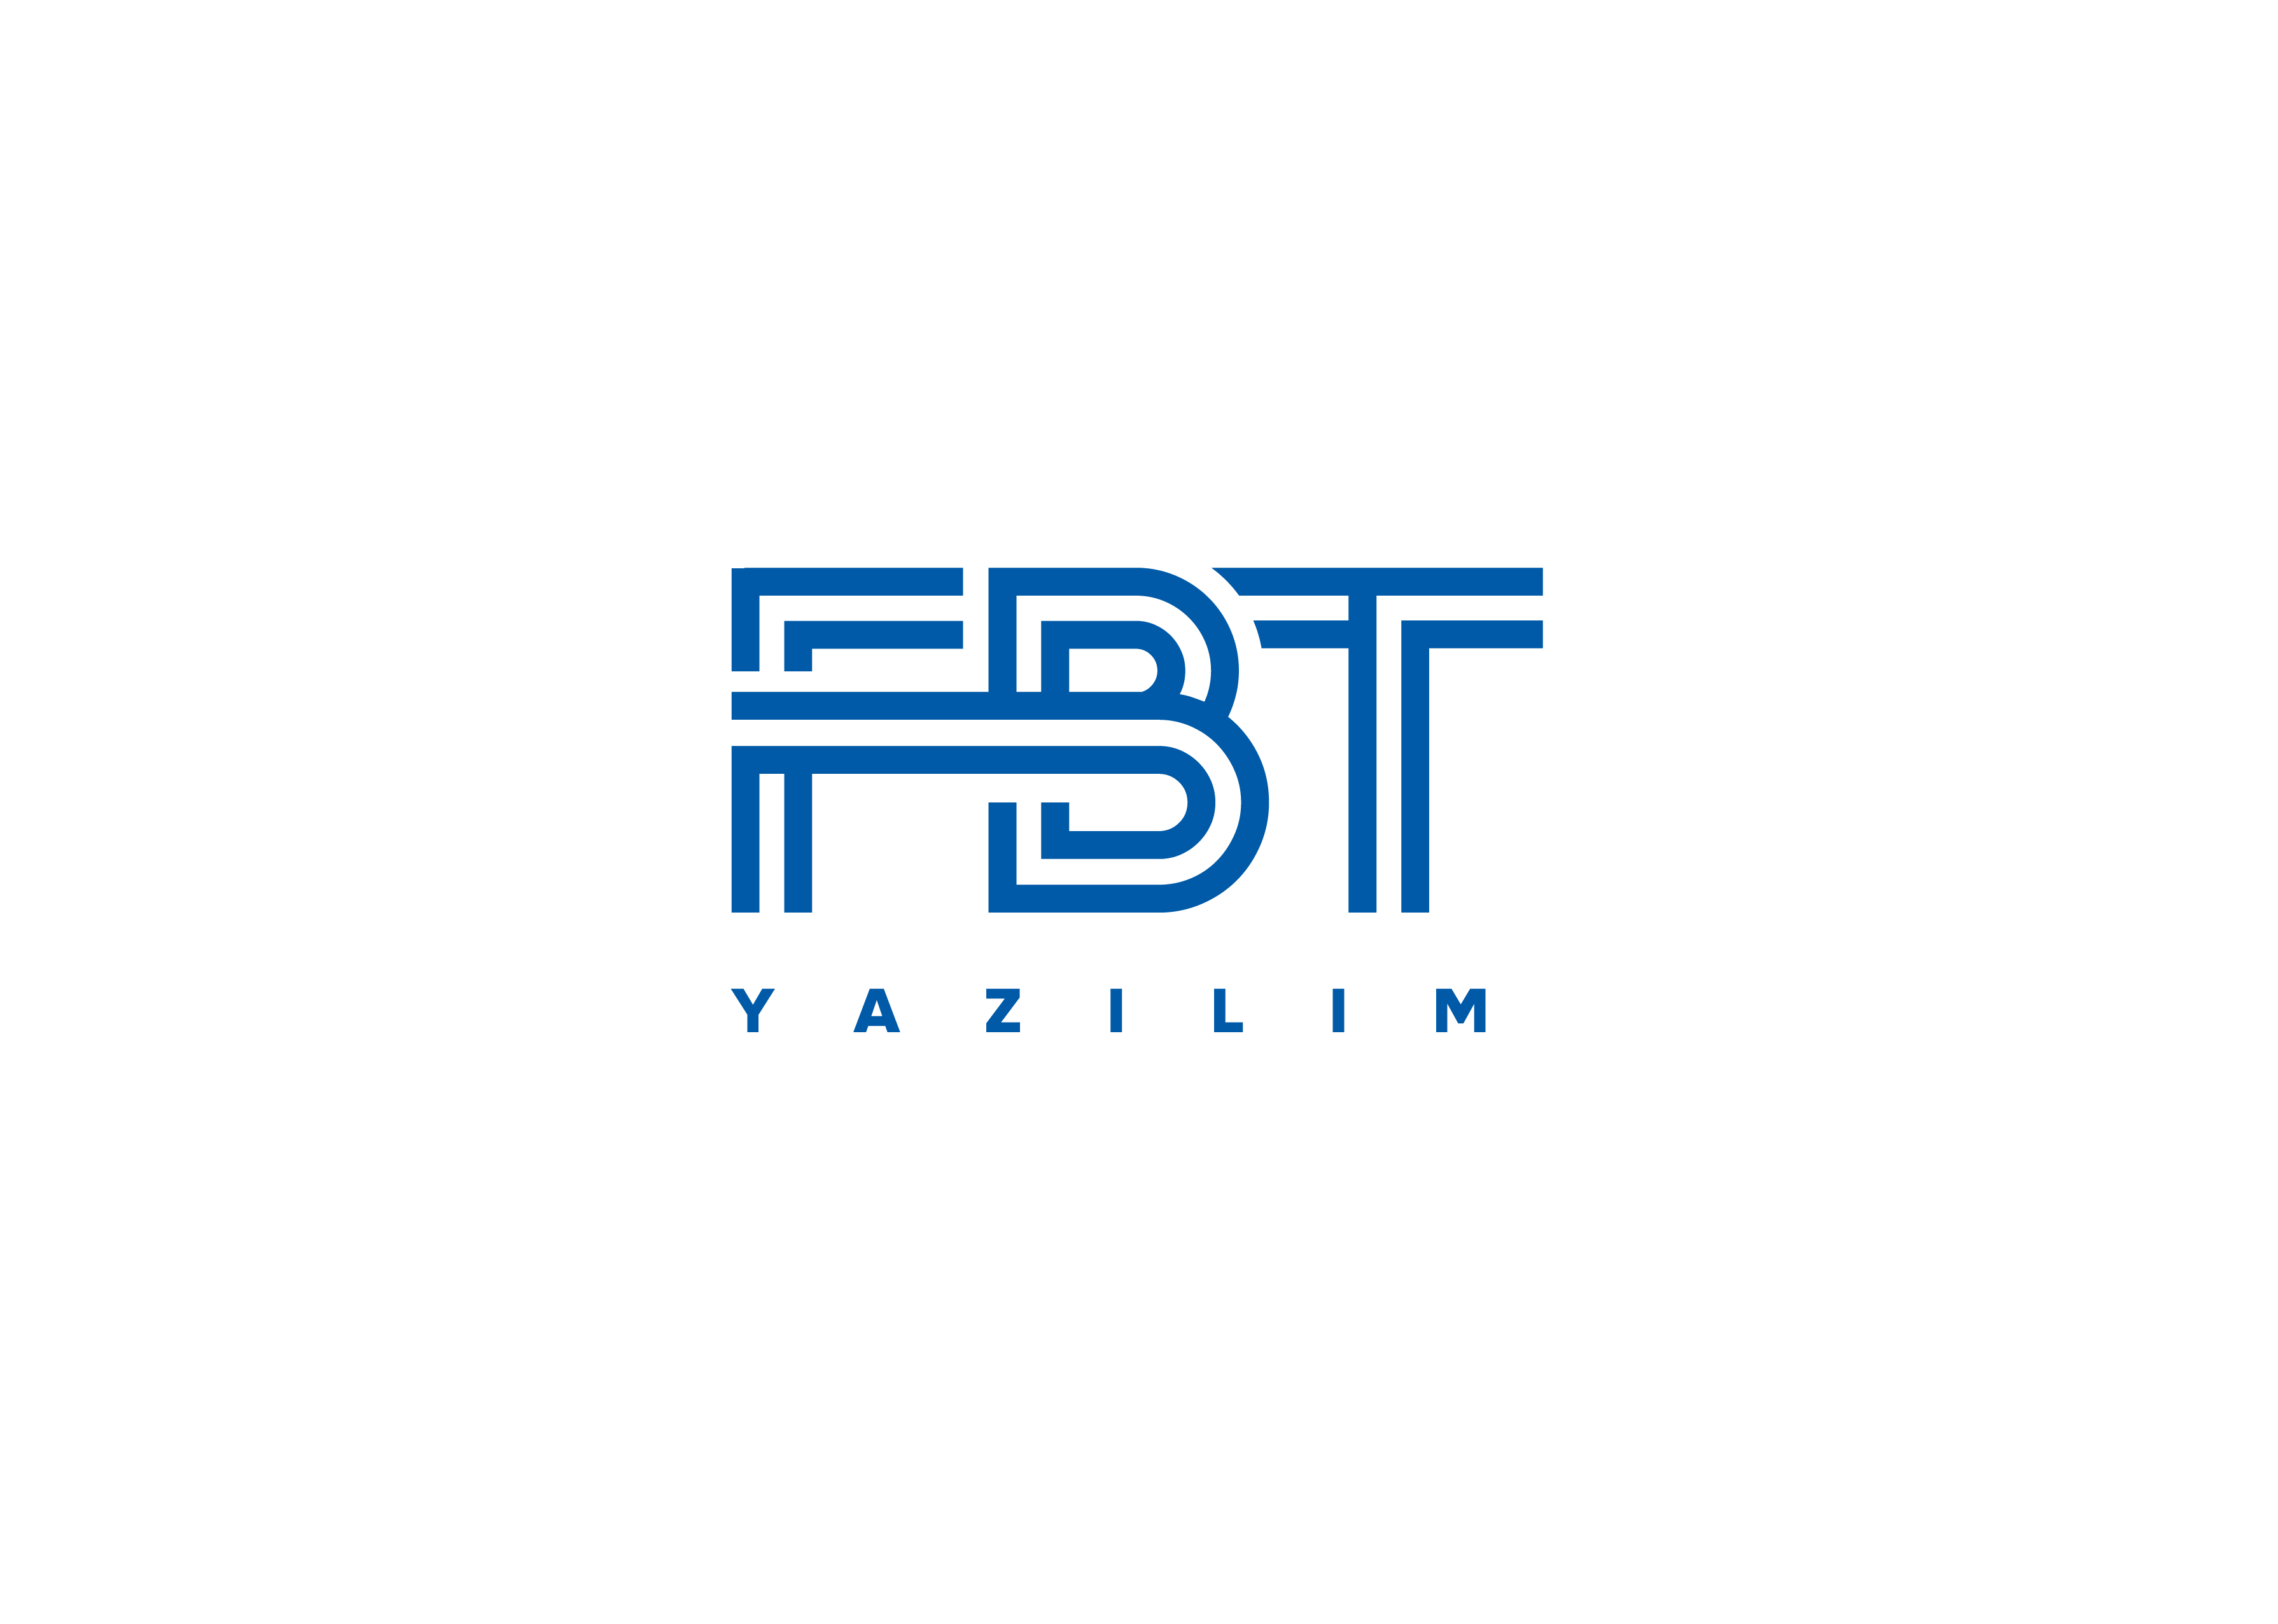 FBT Yazilim profile on Qualified.One